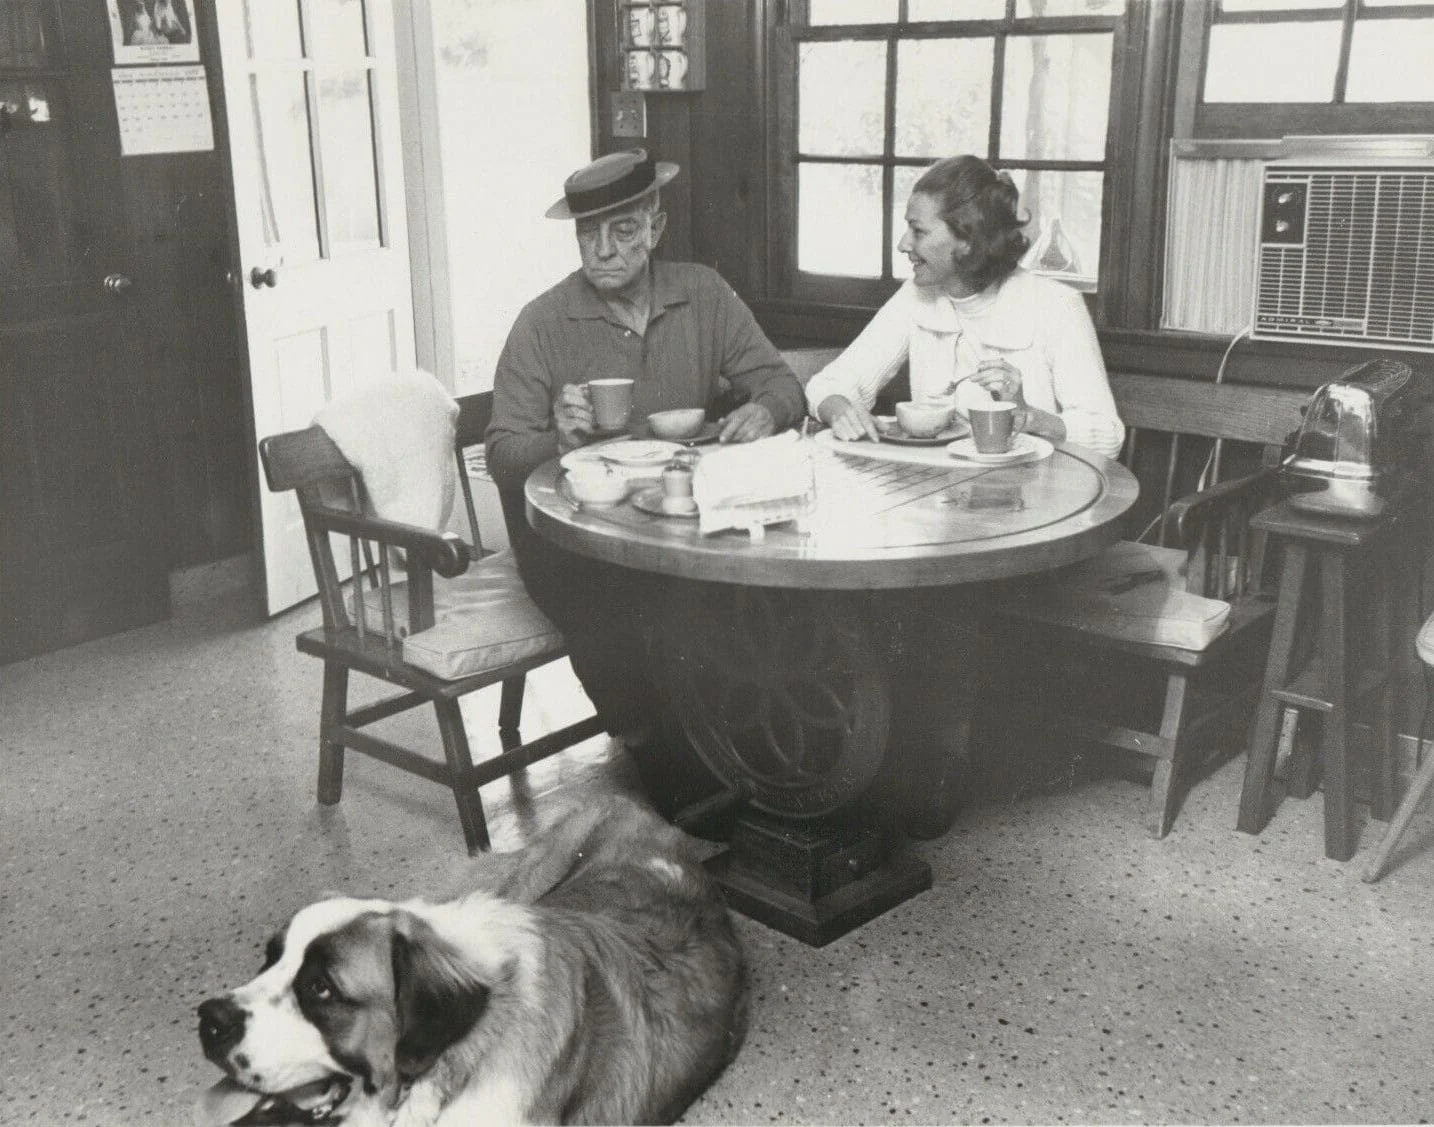 Элеонора и Бастер Китон со своей собакой. Изображение: [Wikimedia Commons](https://commons.wikimedia.org/wiki/File:Press_photo_of_Buster_and_Eleanor_Keaton,_1965_(front)